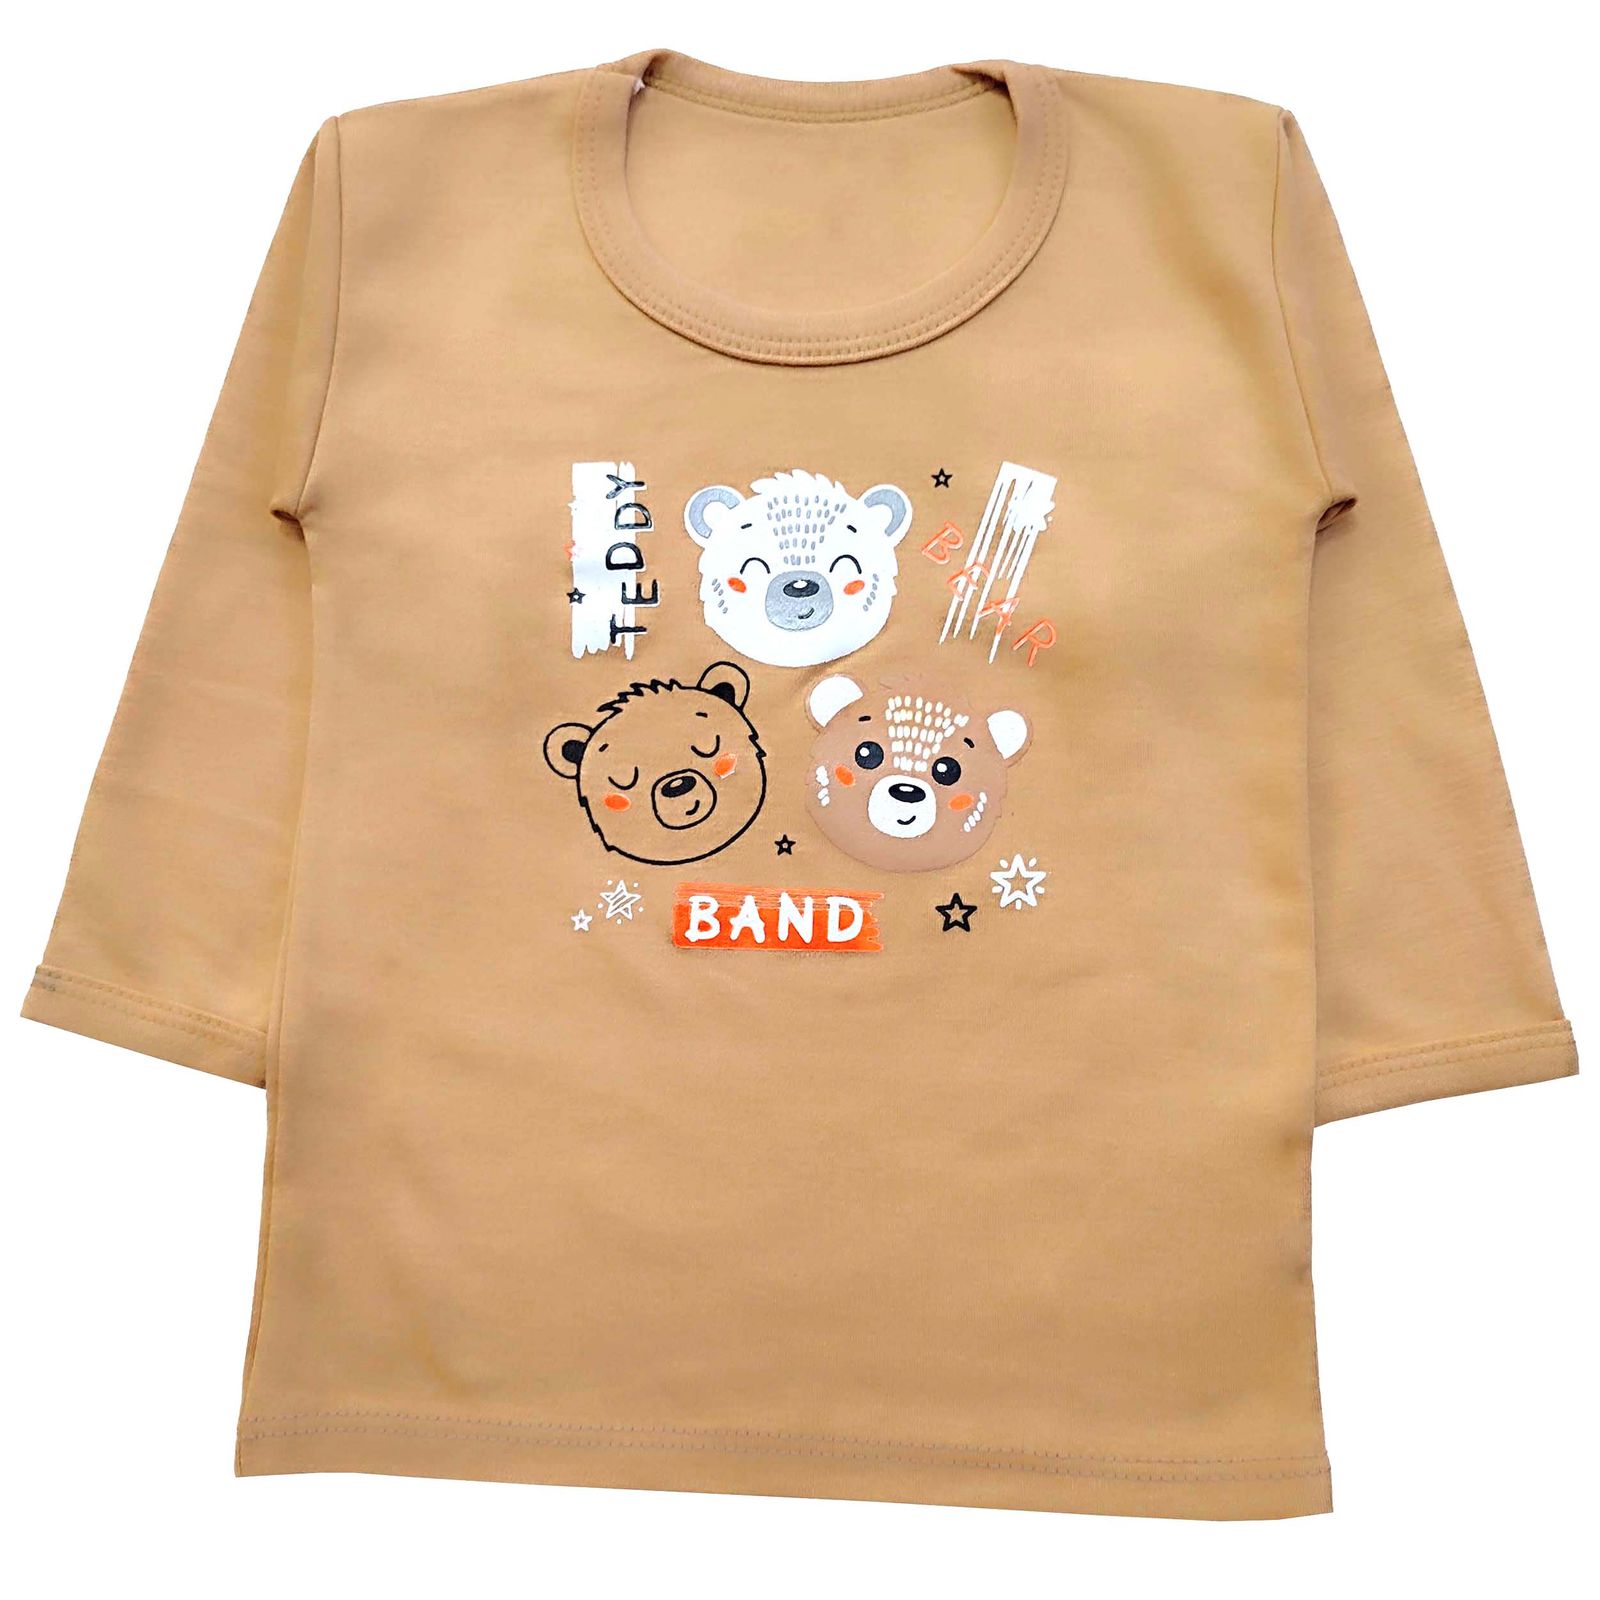 ست تی شرت و شلوار نوزادی مدل کله خرس کد 3927 رنگ نسکافه ای -  - 2